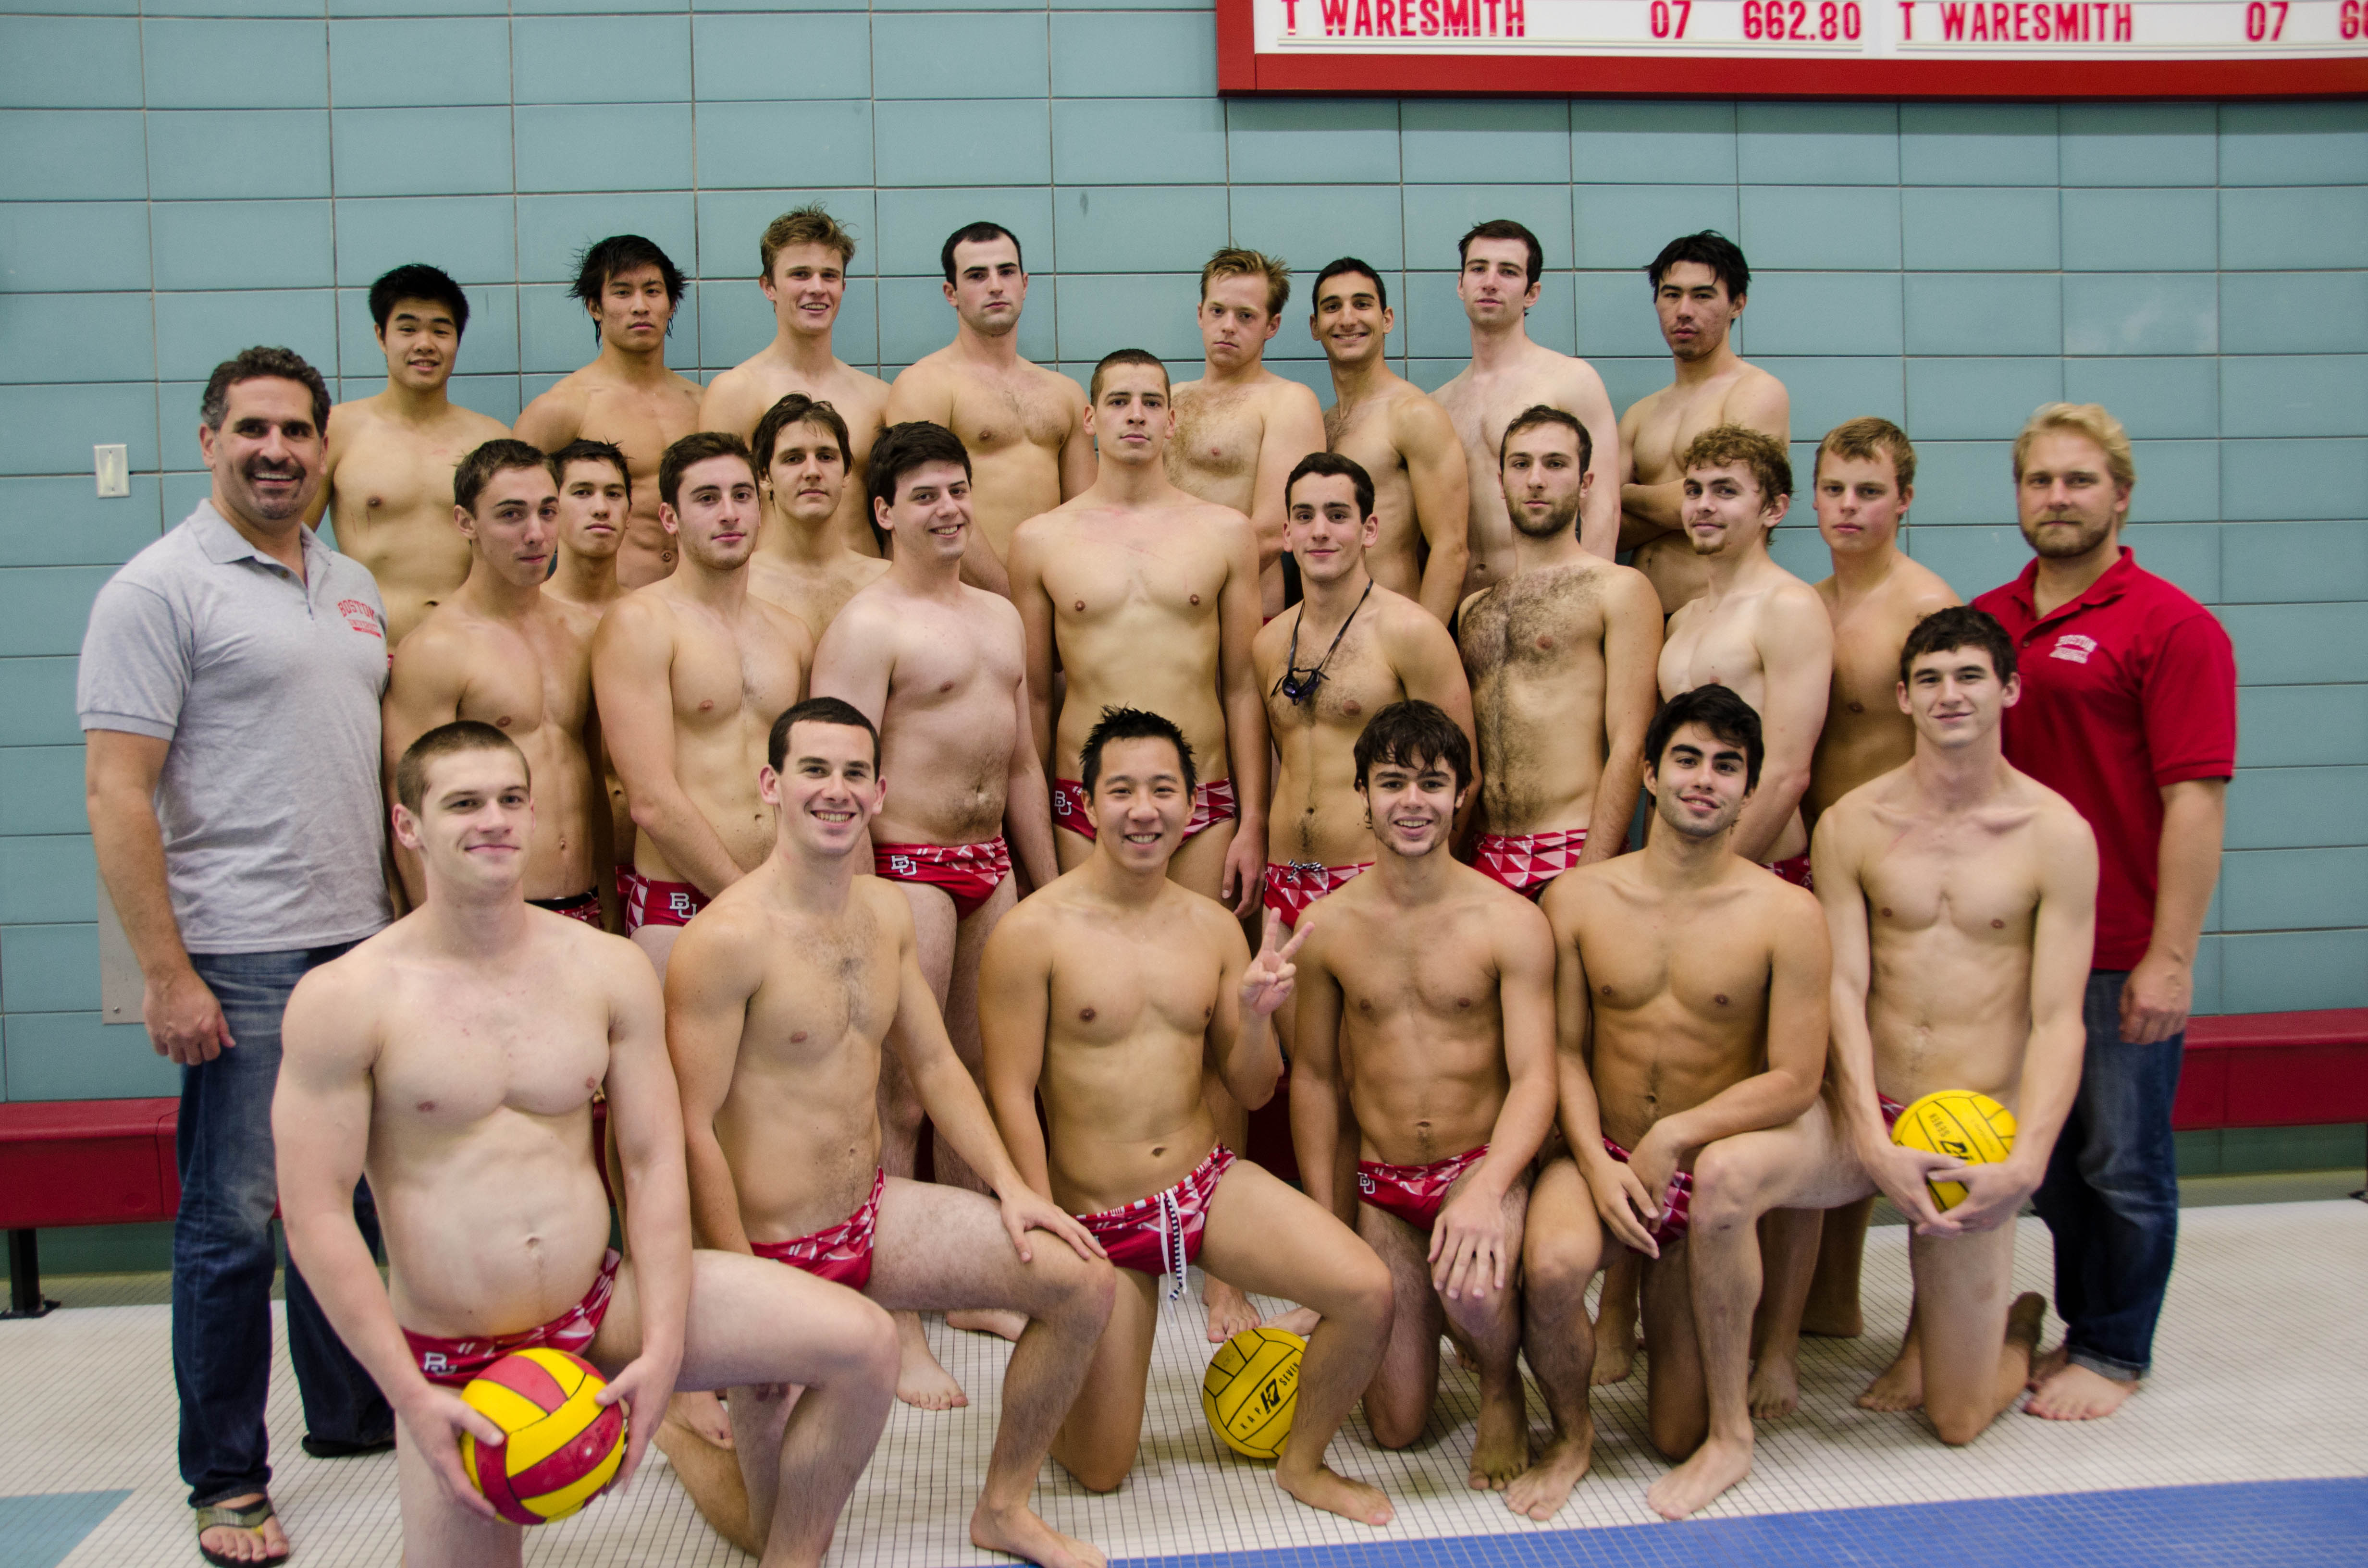 Boston Univ. 2013 Water Polo team